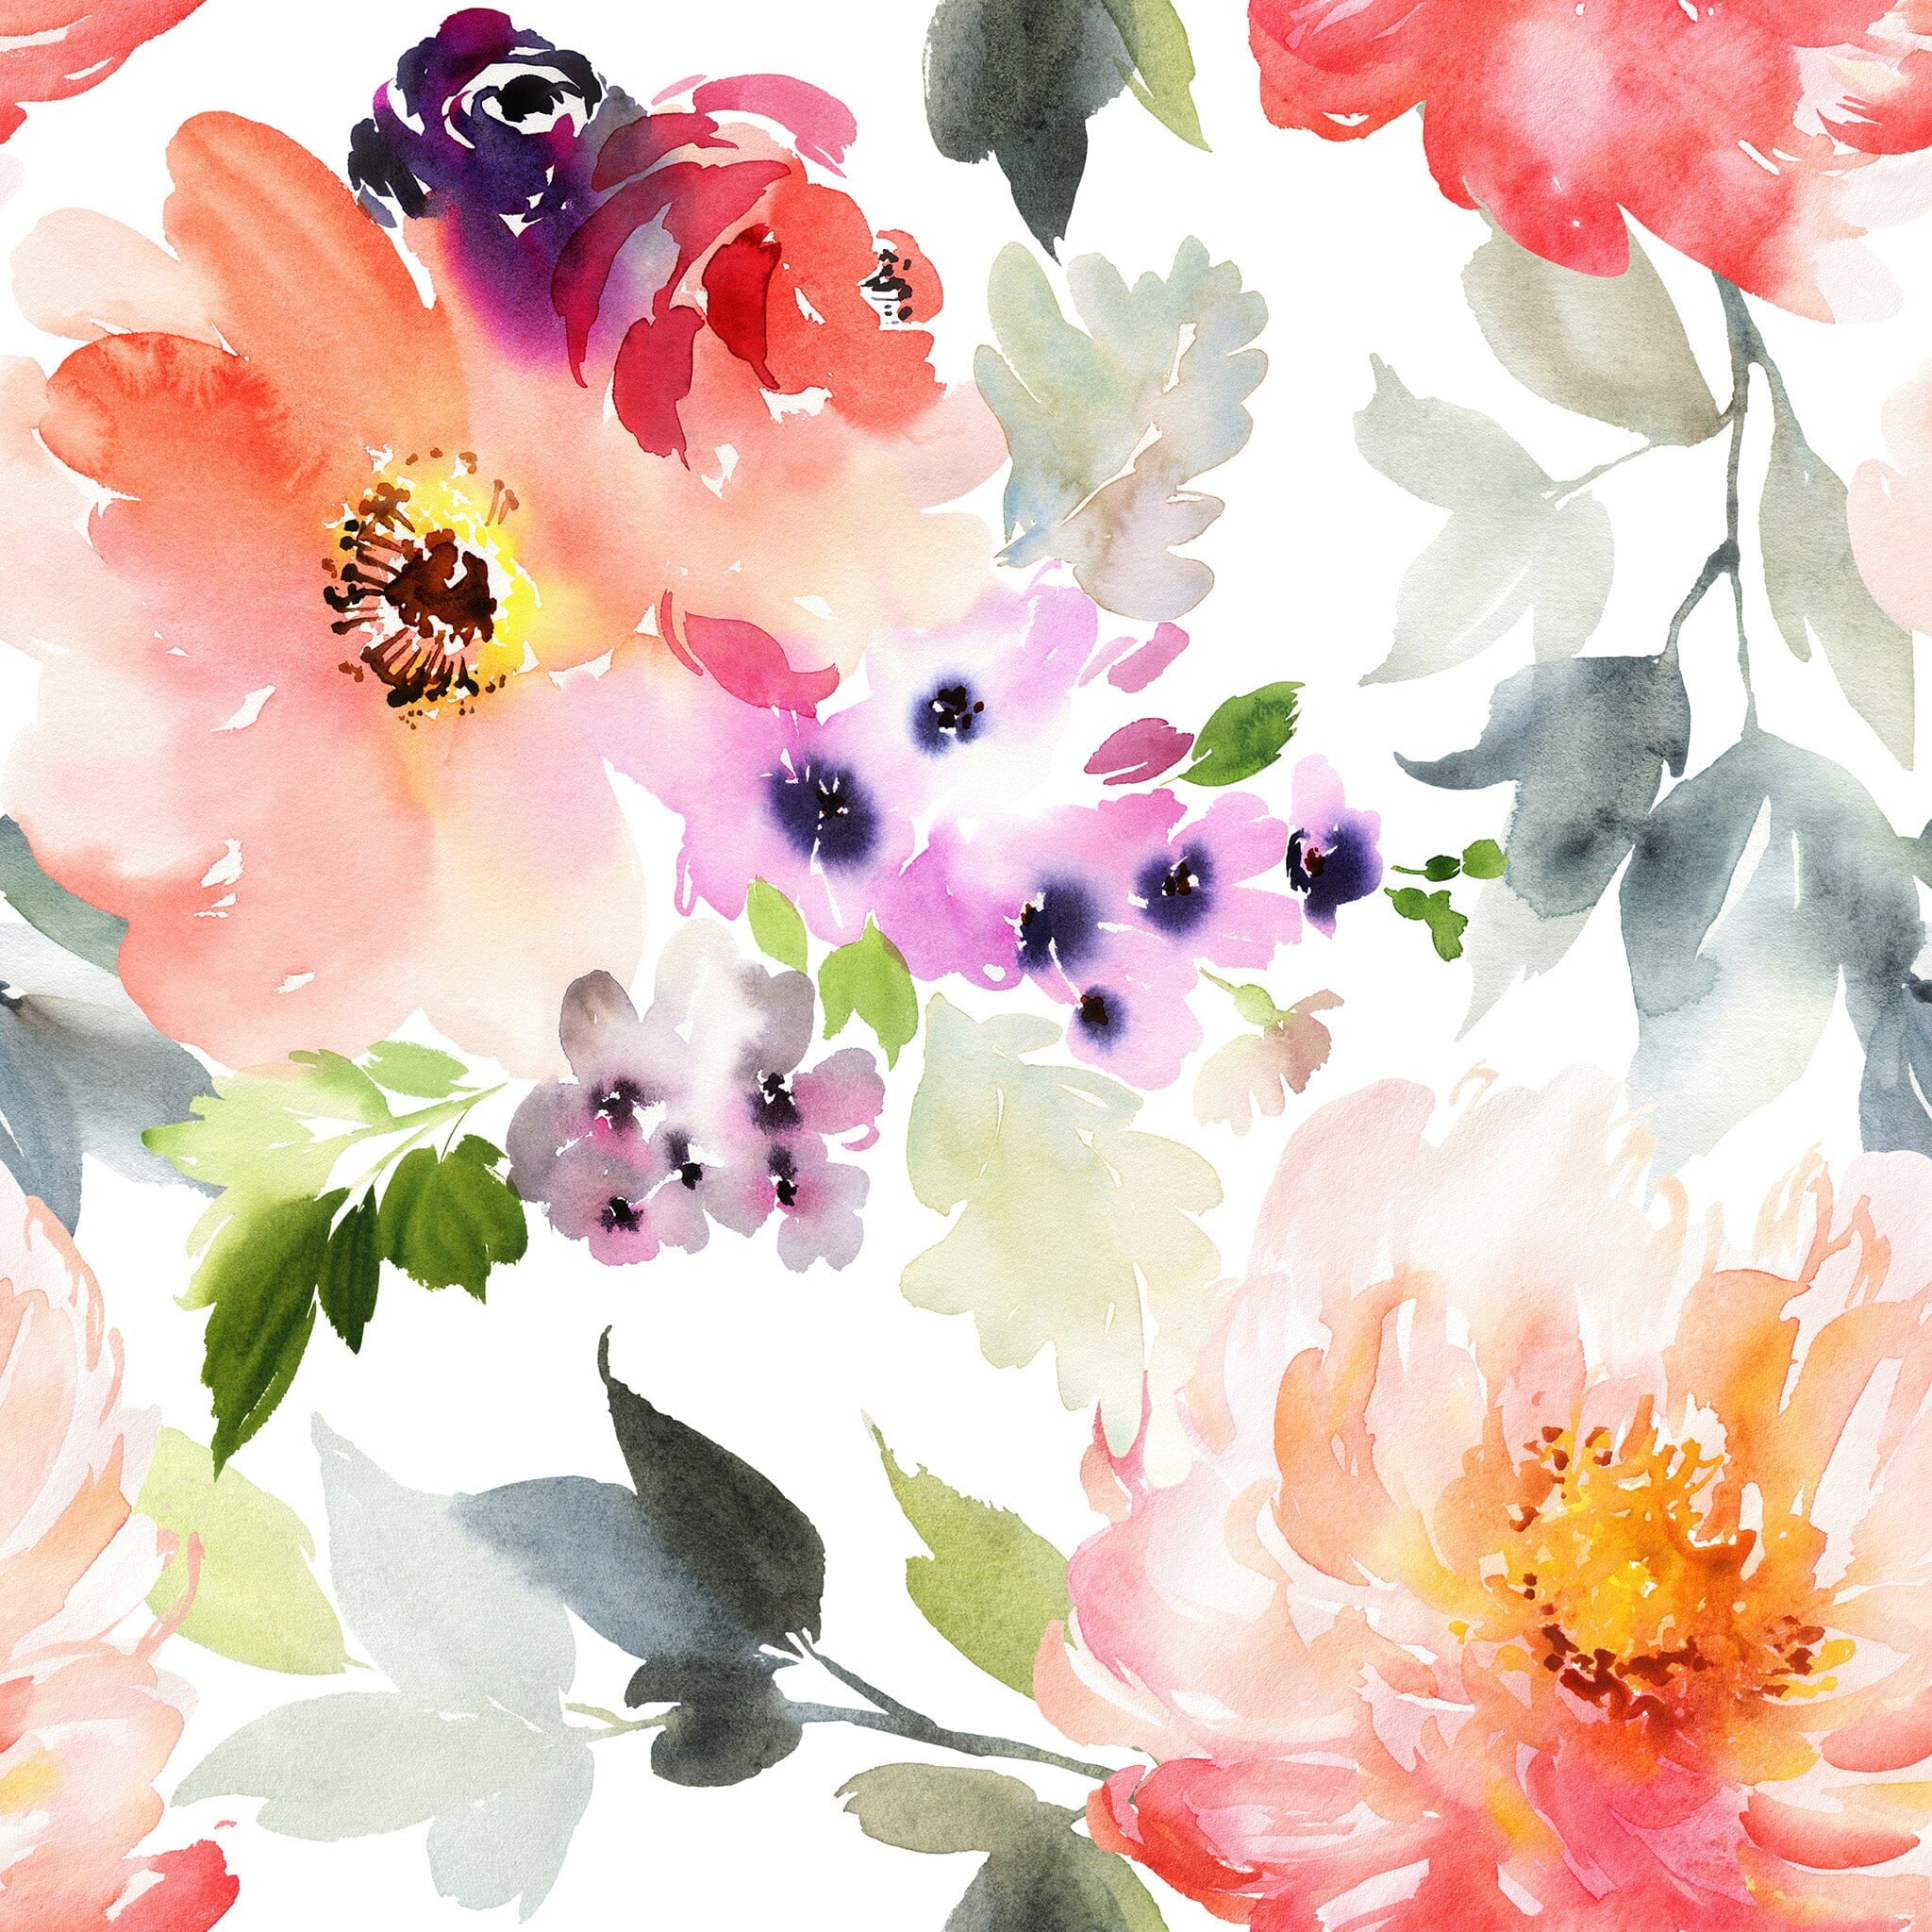 Free Vector  Watercolor flowers wallpaper in pastel colors